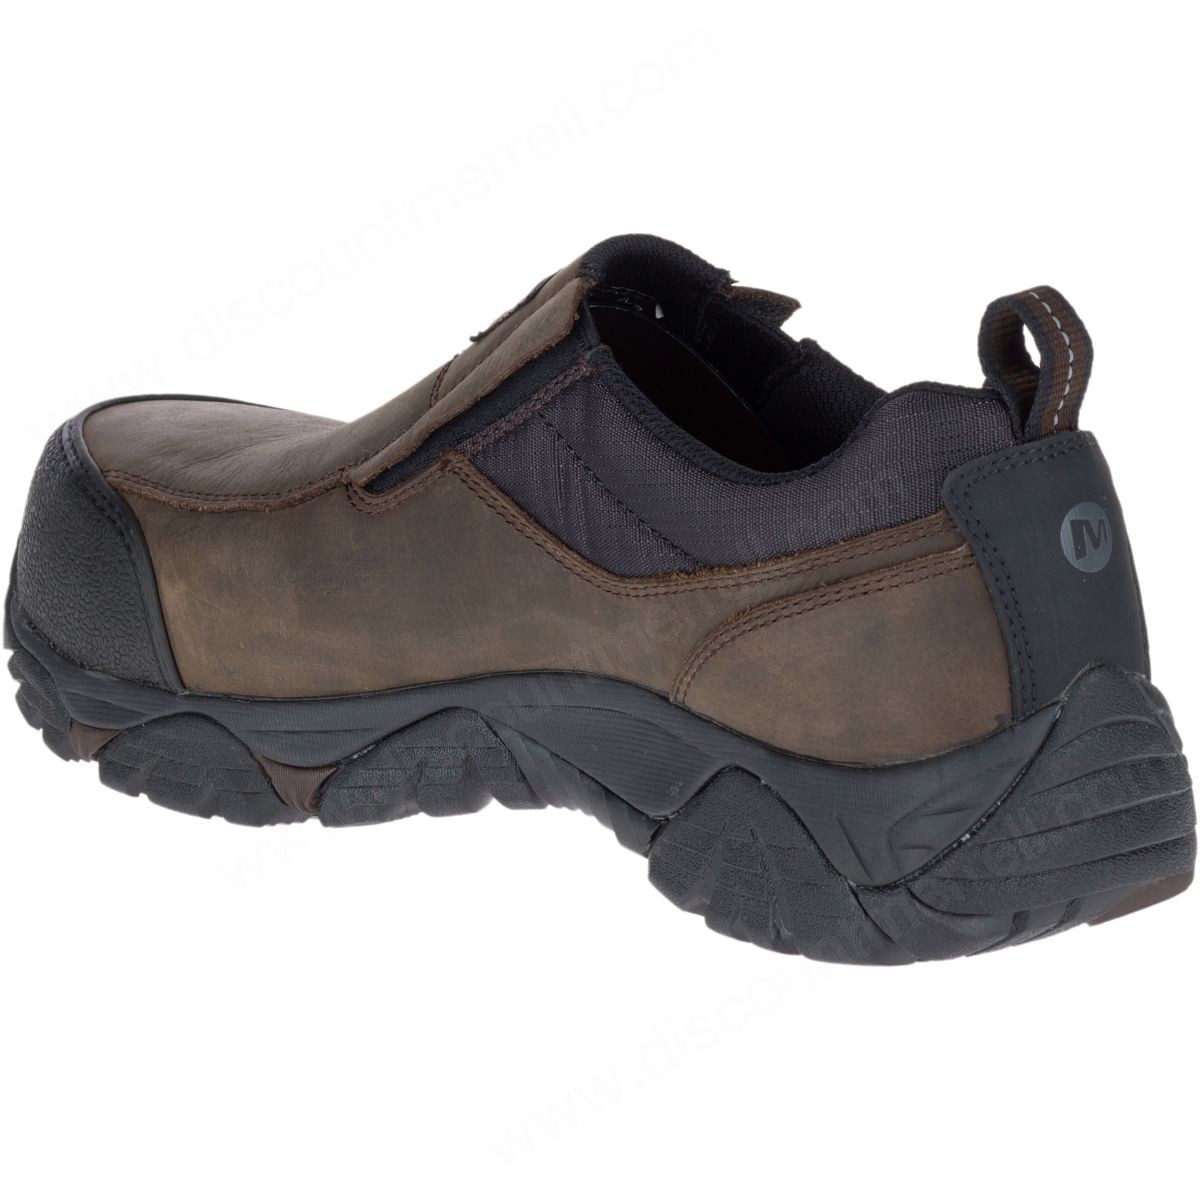 Merrell Mens's Moab Rover Moc Comp Toe Work Shoes Wide Width Espresso - -6